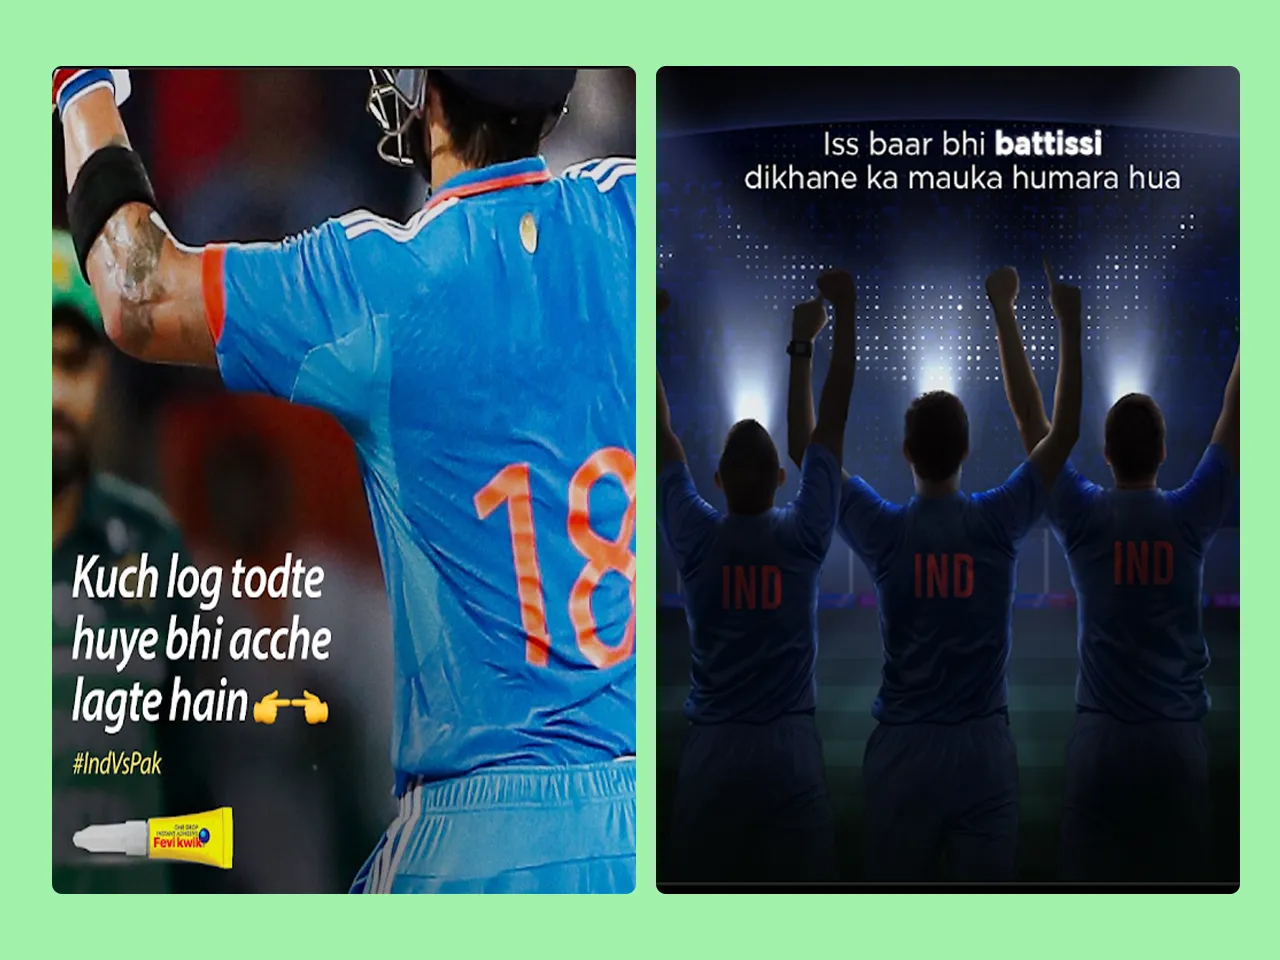 Brands strike big with India-Pakistan match creatives